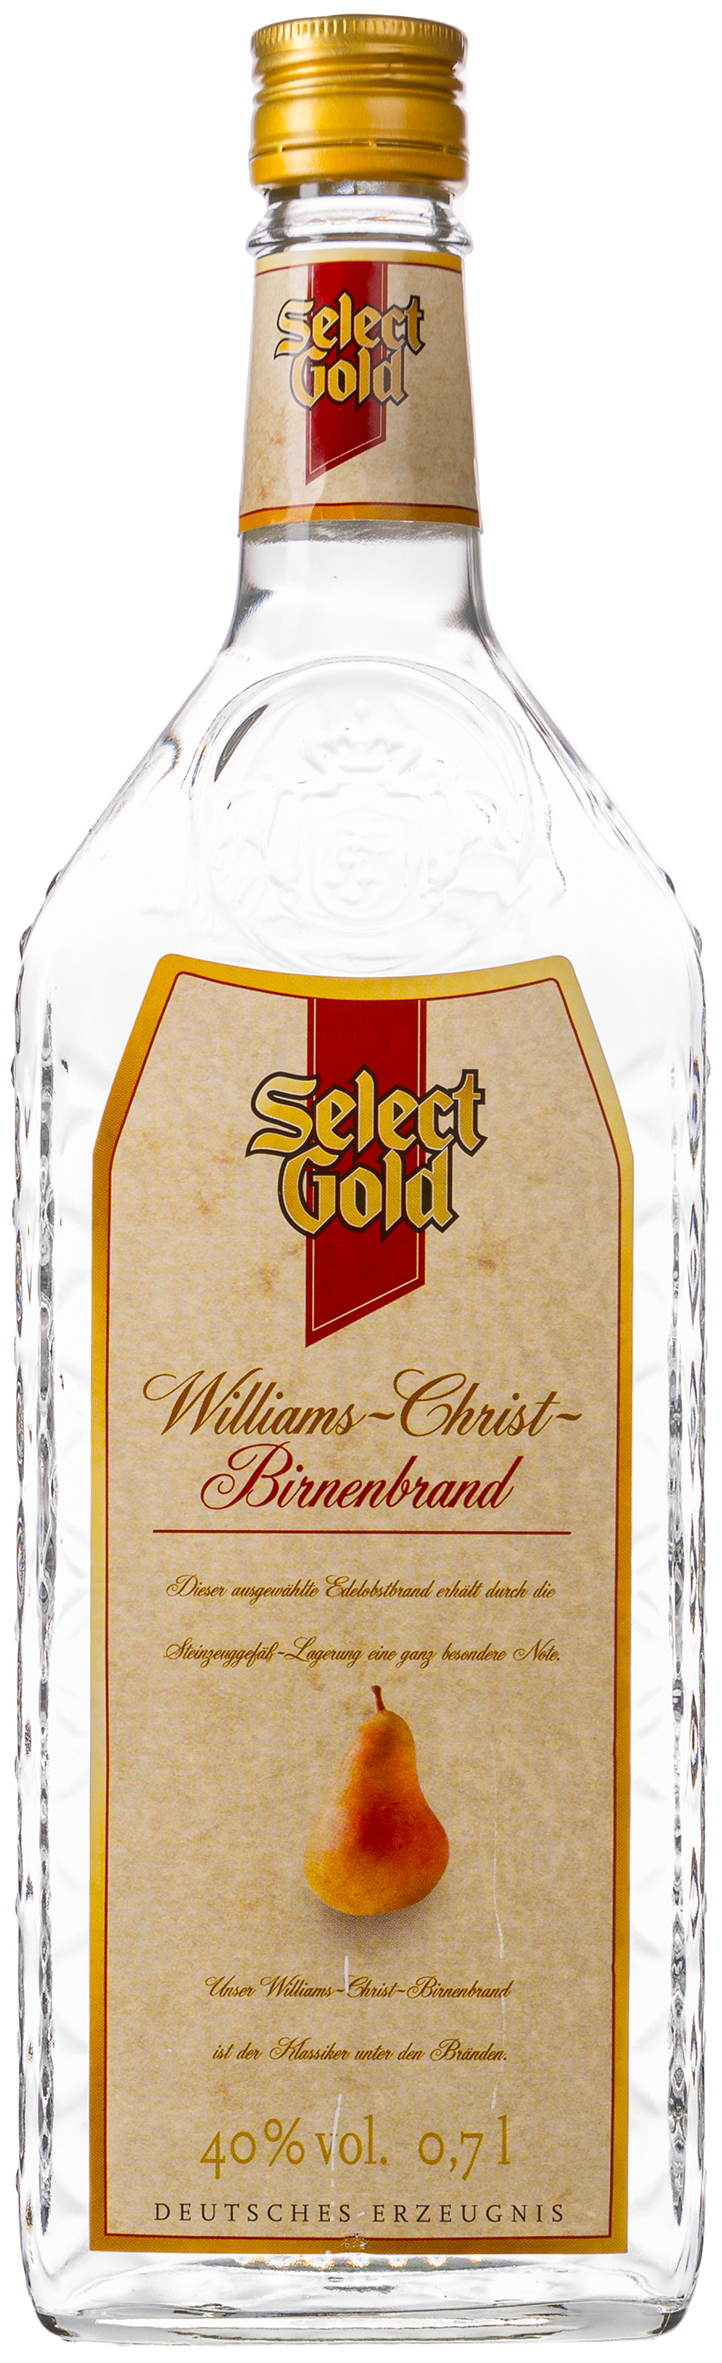 Select Gold Williams Christ Birnenbrand 40% 0,7L